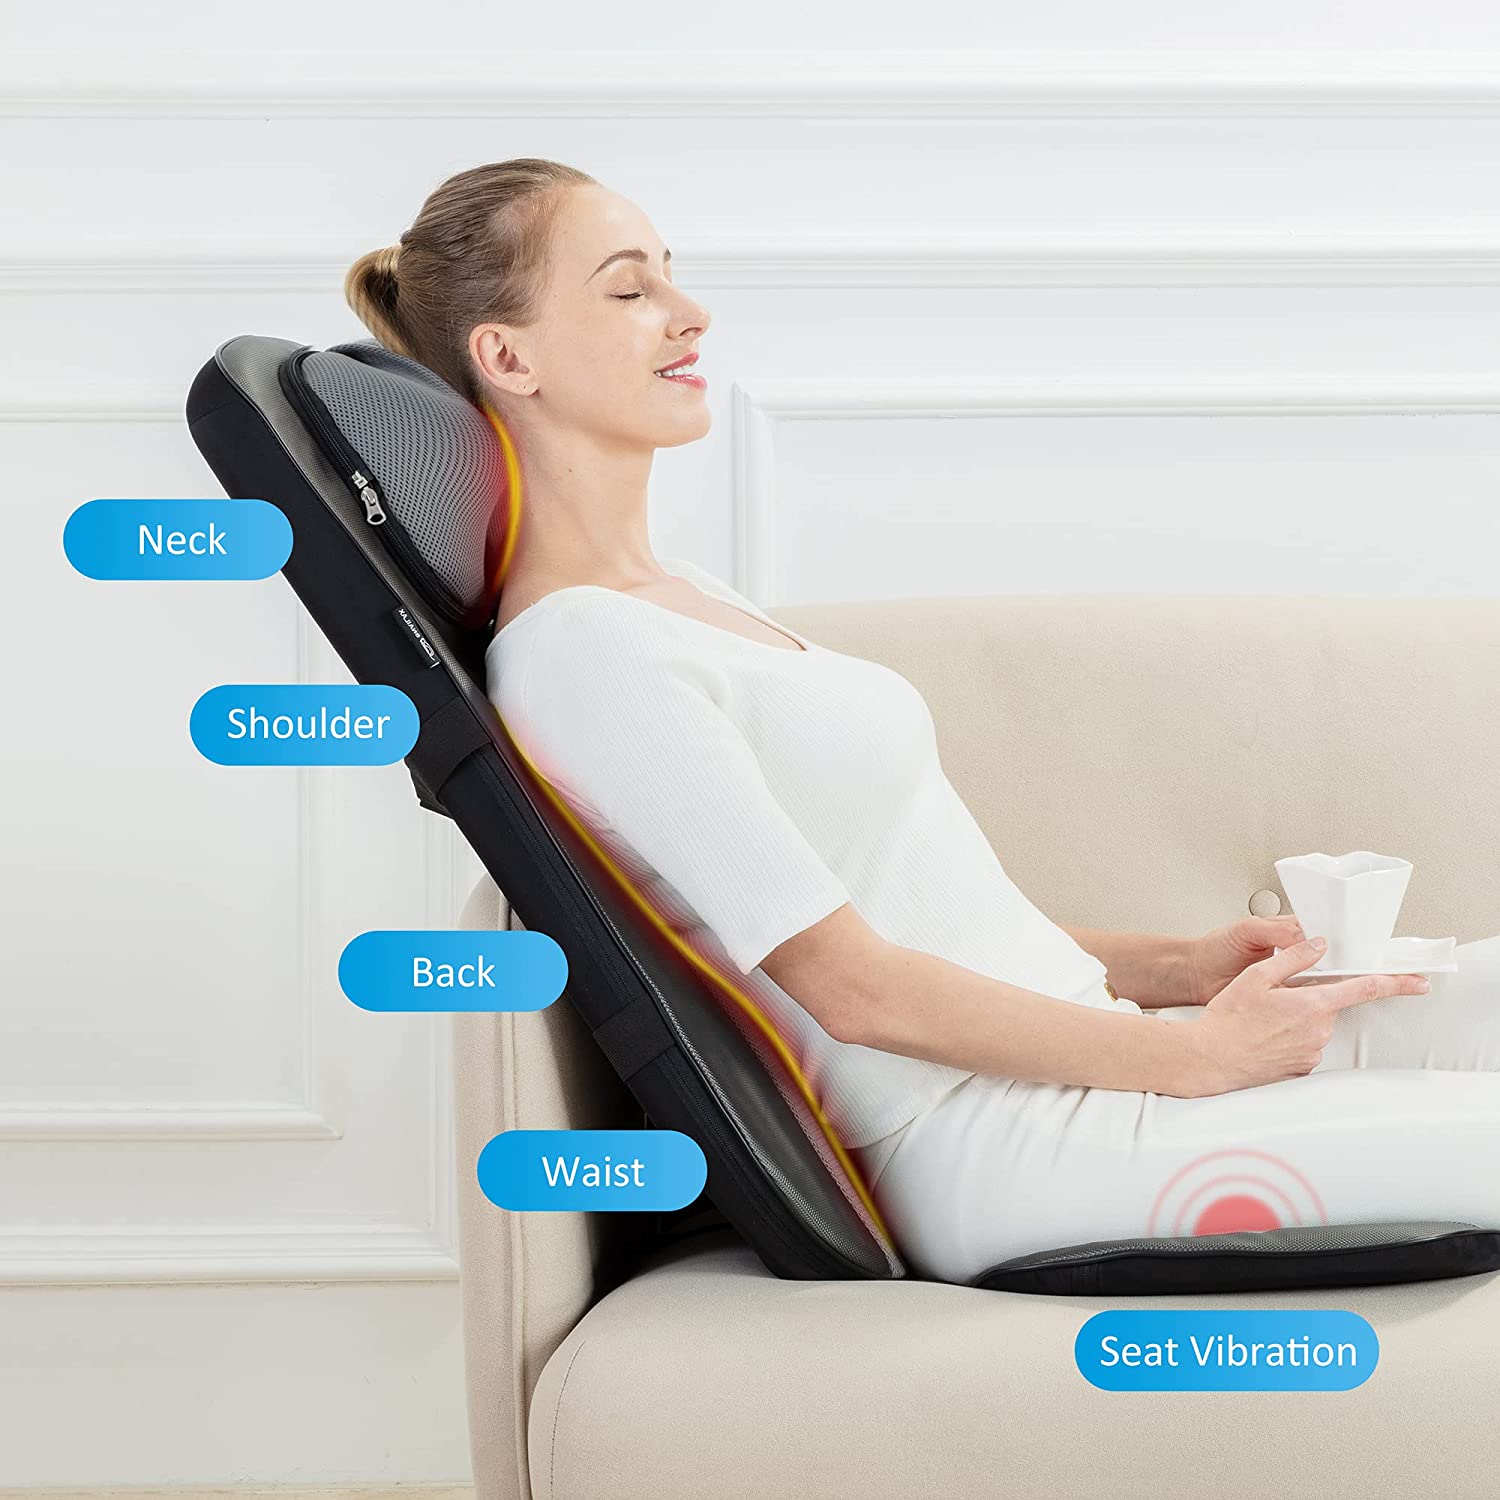 Snailax Shiatsu Full Back Massager with Heat, Adjustable Chair Massager pad, Rolling Massage Seat Cushion, Gifts - image 4 of 6